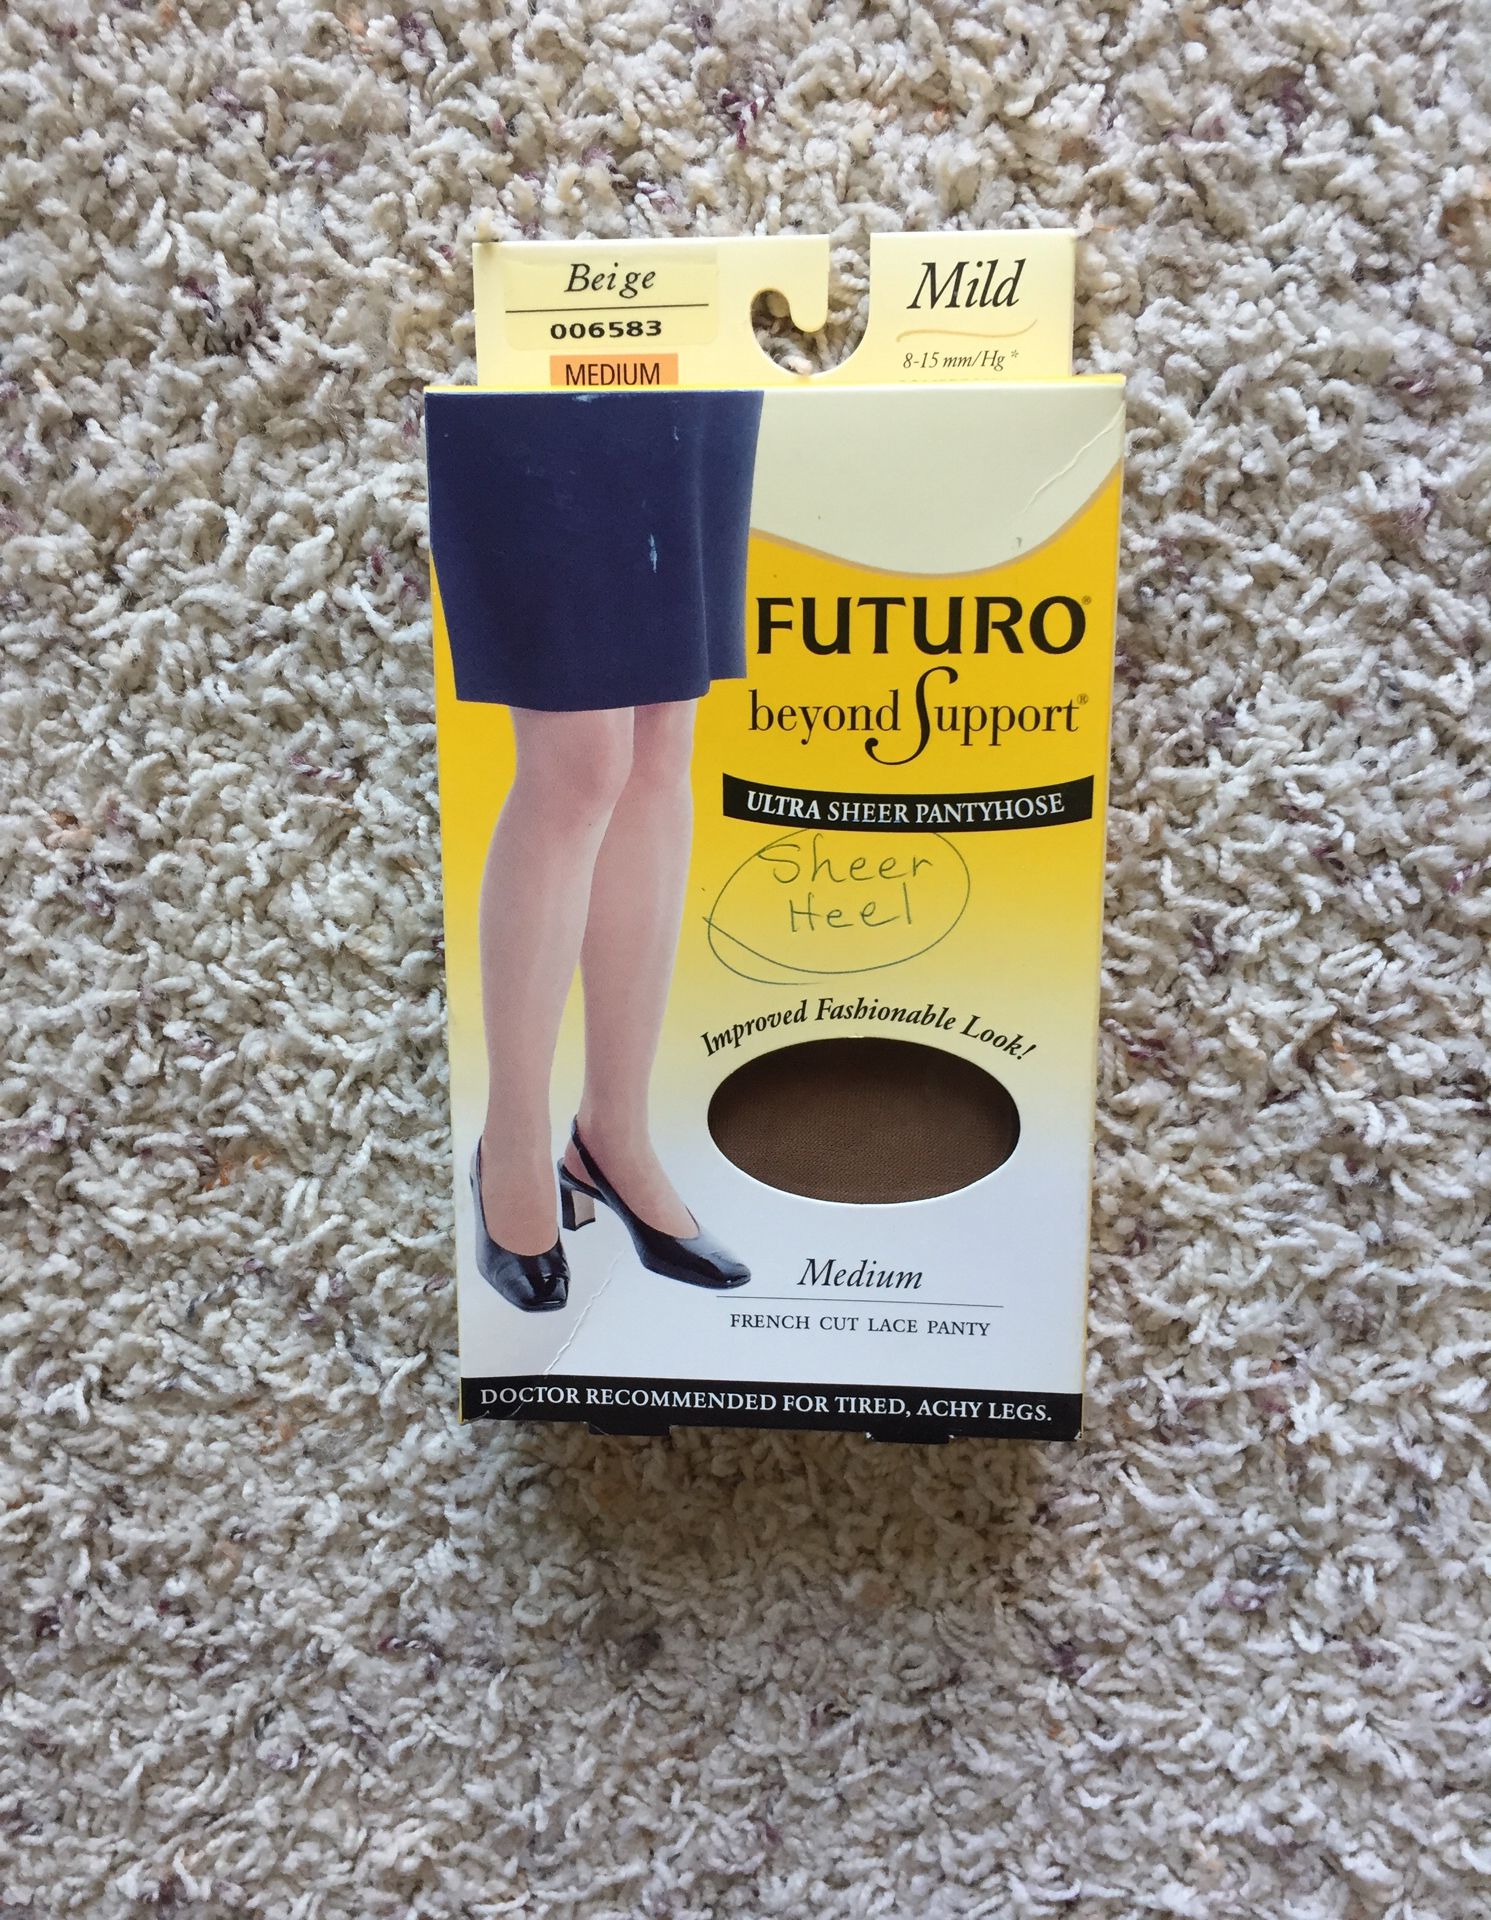 NEW Futuro support ultra sheer pantyhose.  